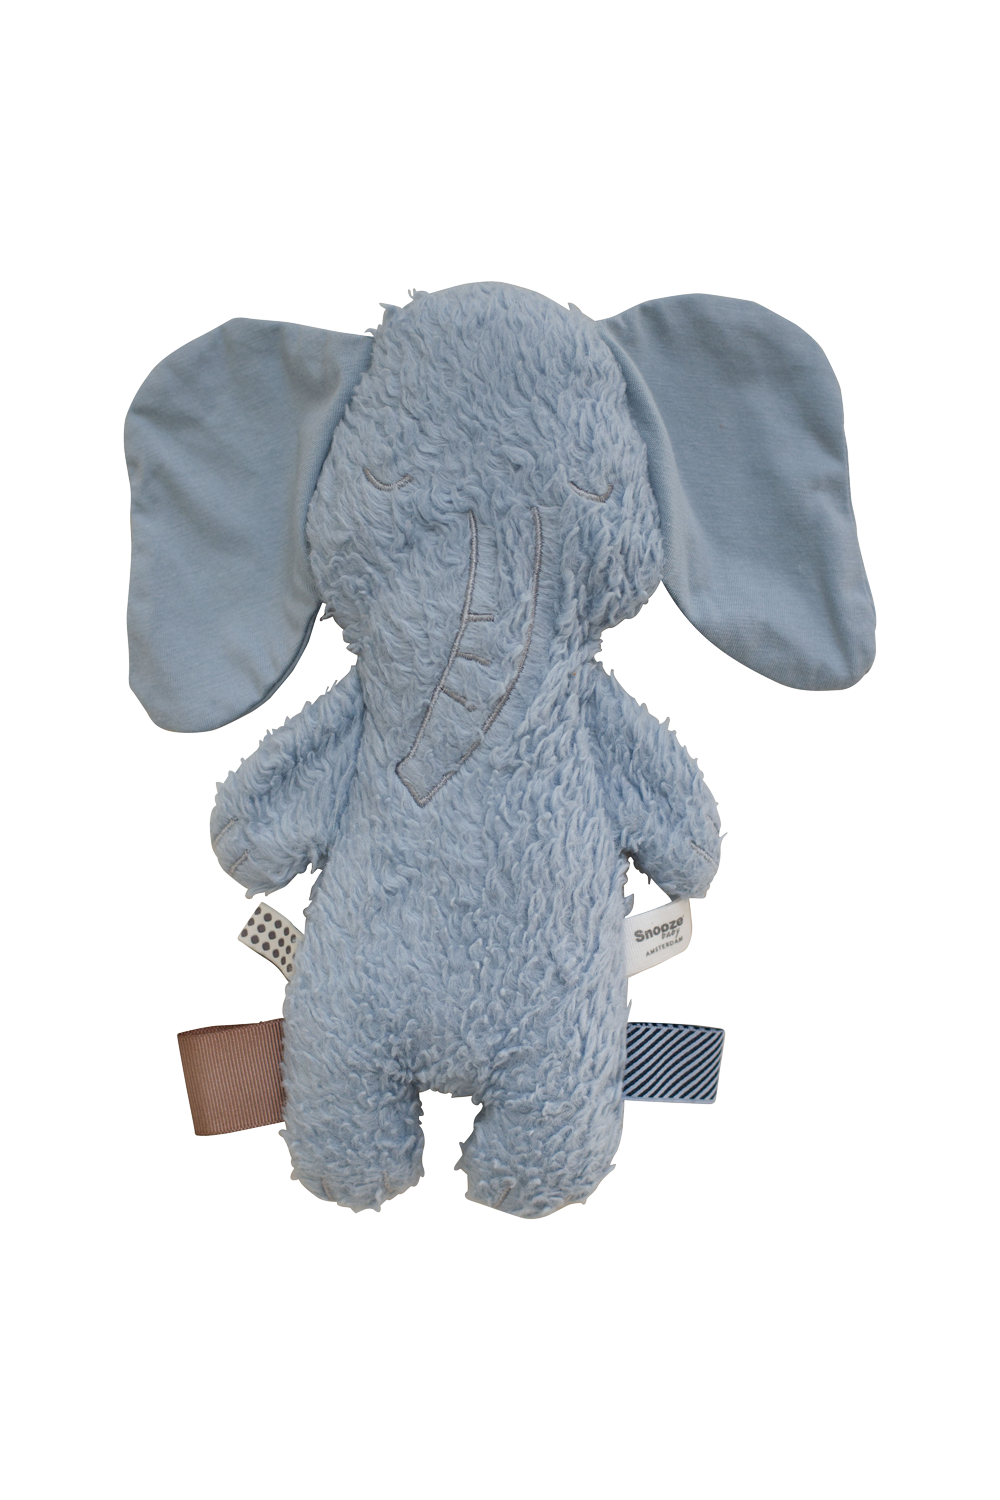 ORGANIC Olly Elephant